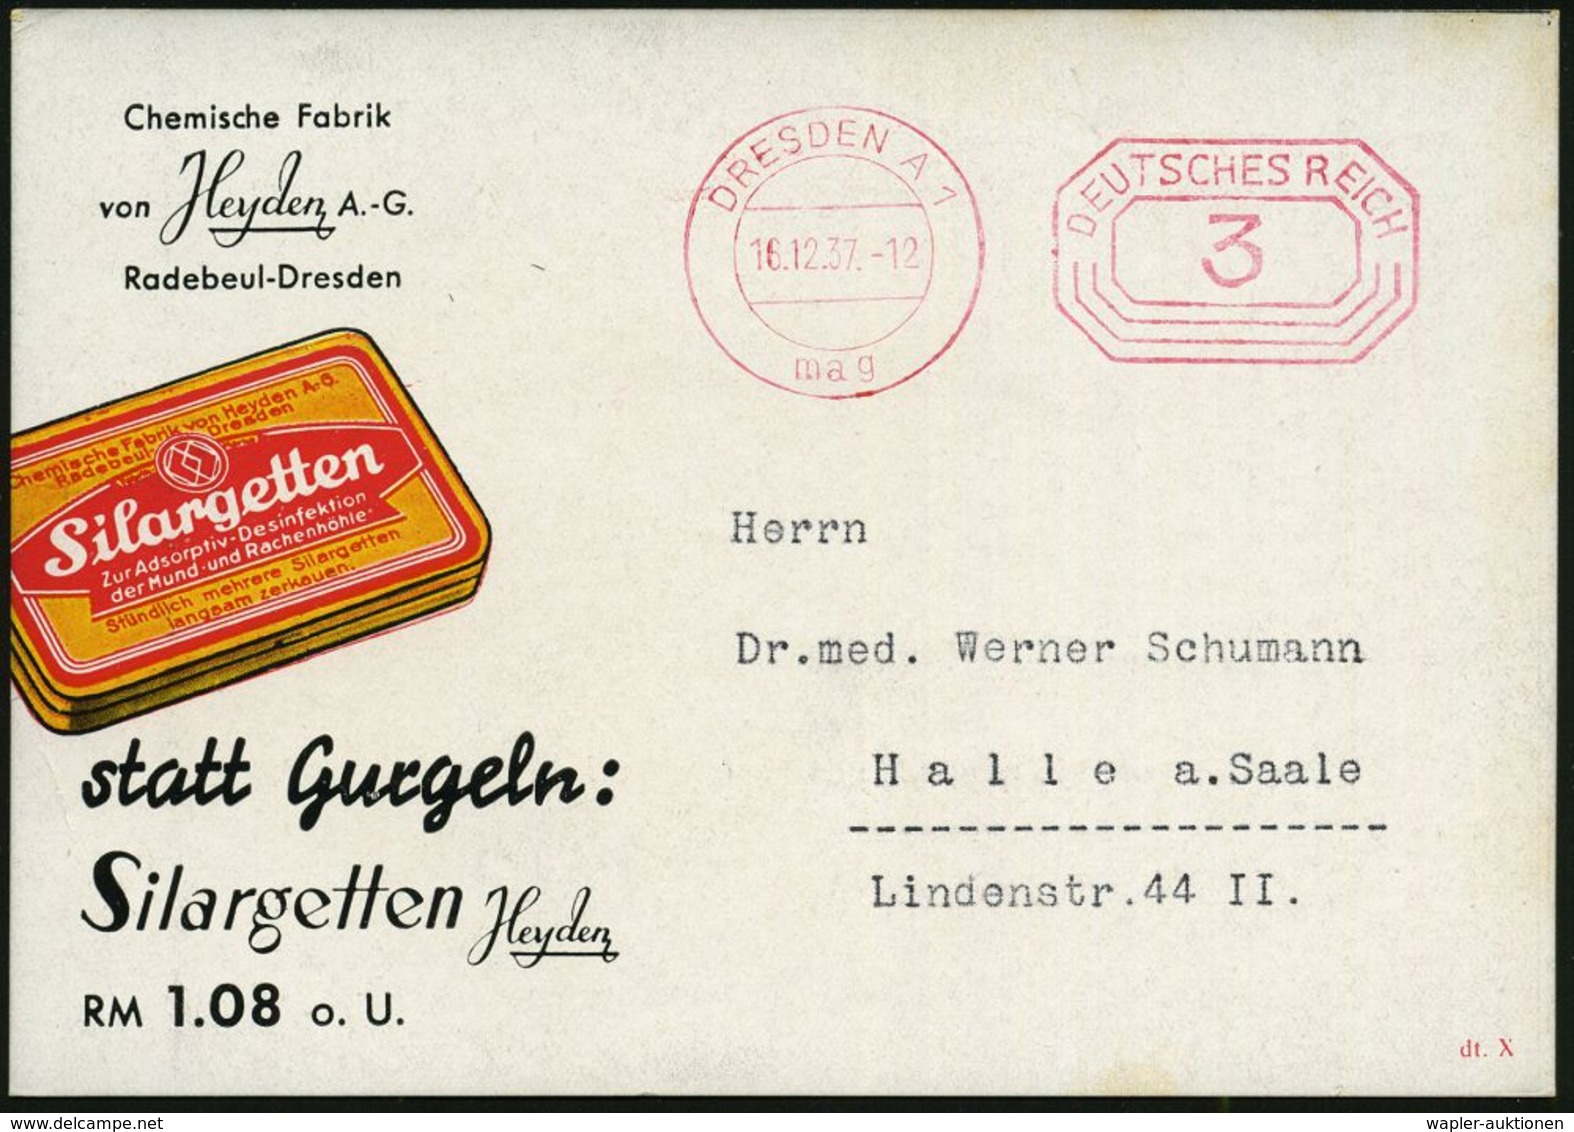 PÄDIATRIE / GYNÄKOLOGIE : DRESDEN A 1/ Mag 1937 (16.12.) PFS 3 Pf. Auf Color-Reklame-Kt.: Silargetten Heyden AG. (Pharma - Malattie